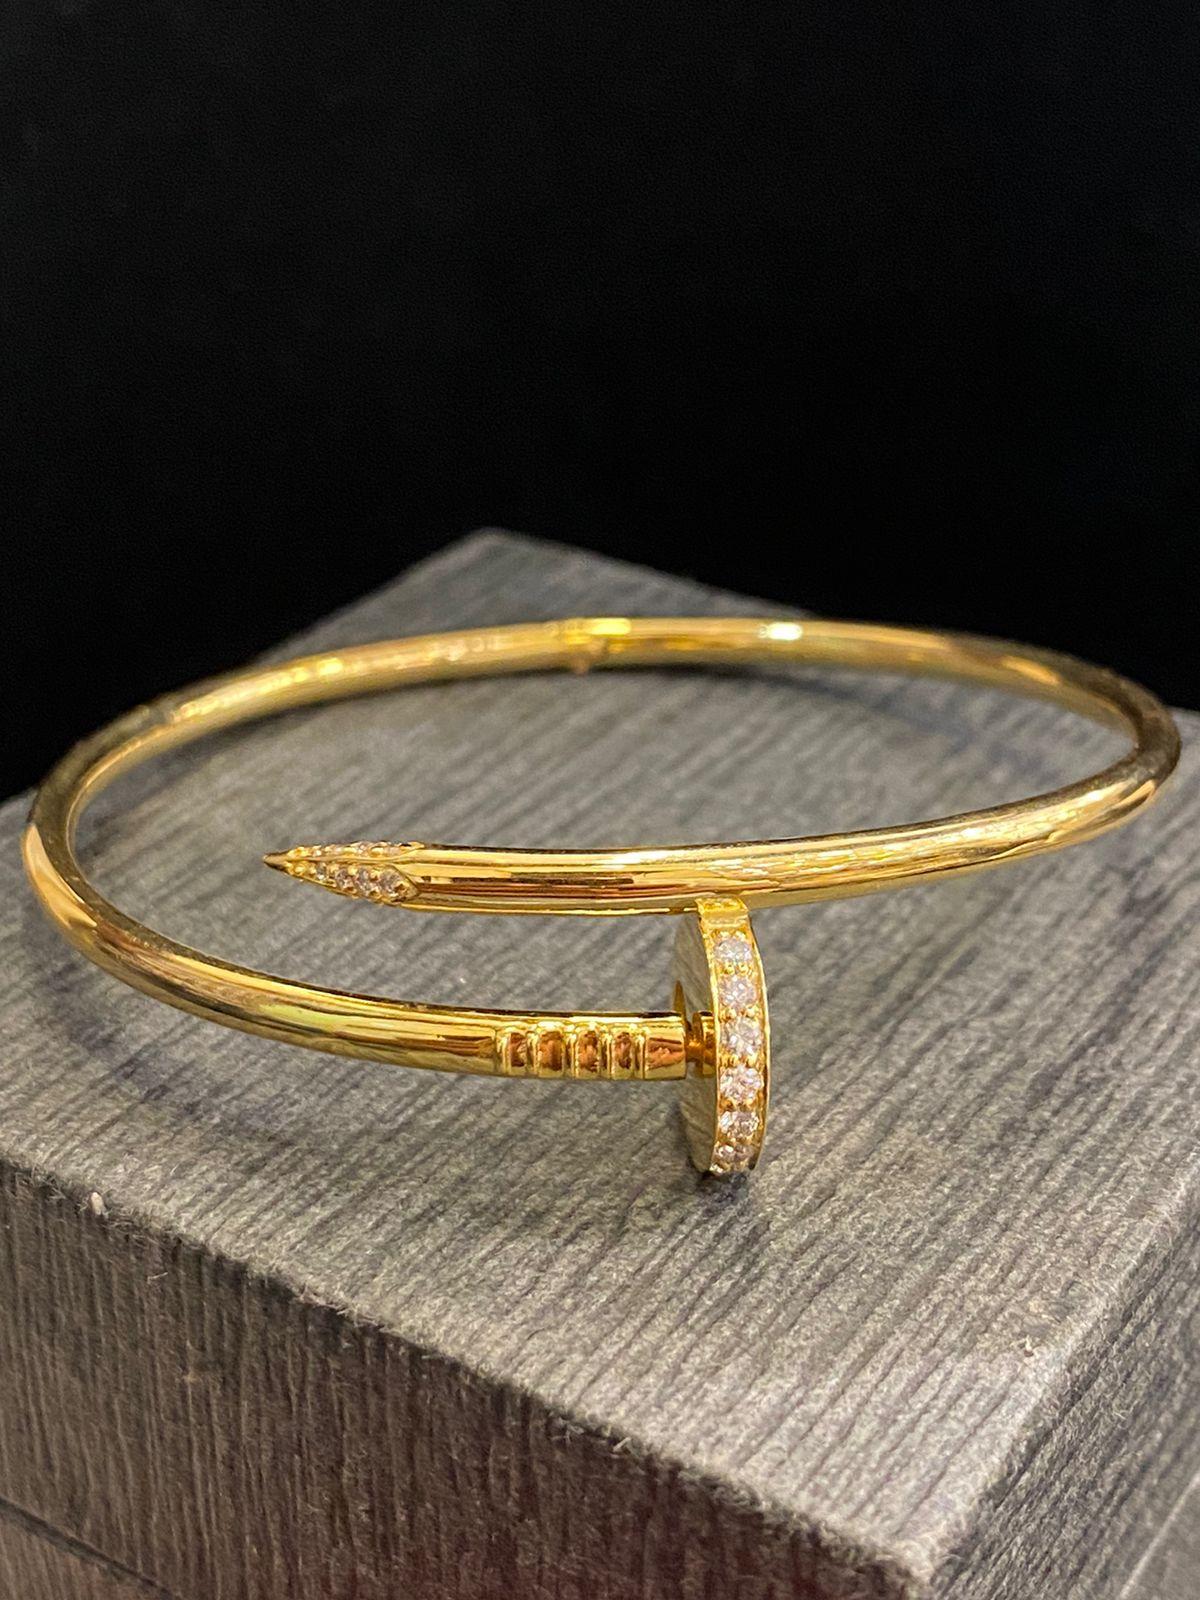 Exclusive design in 18k gold bracelet with diamonds ct 0,45.